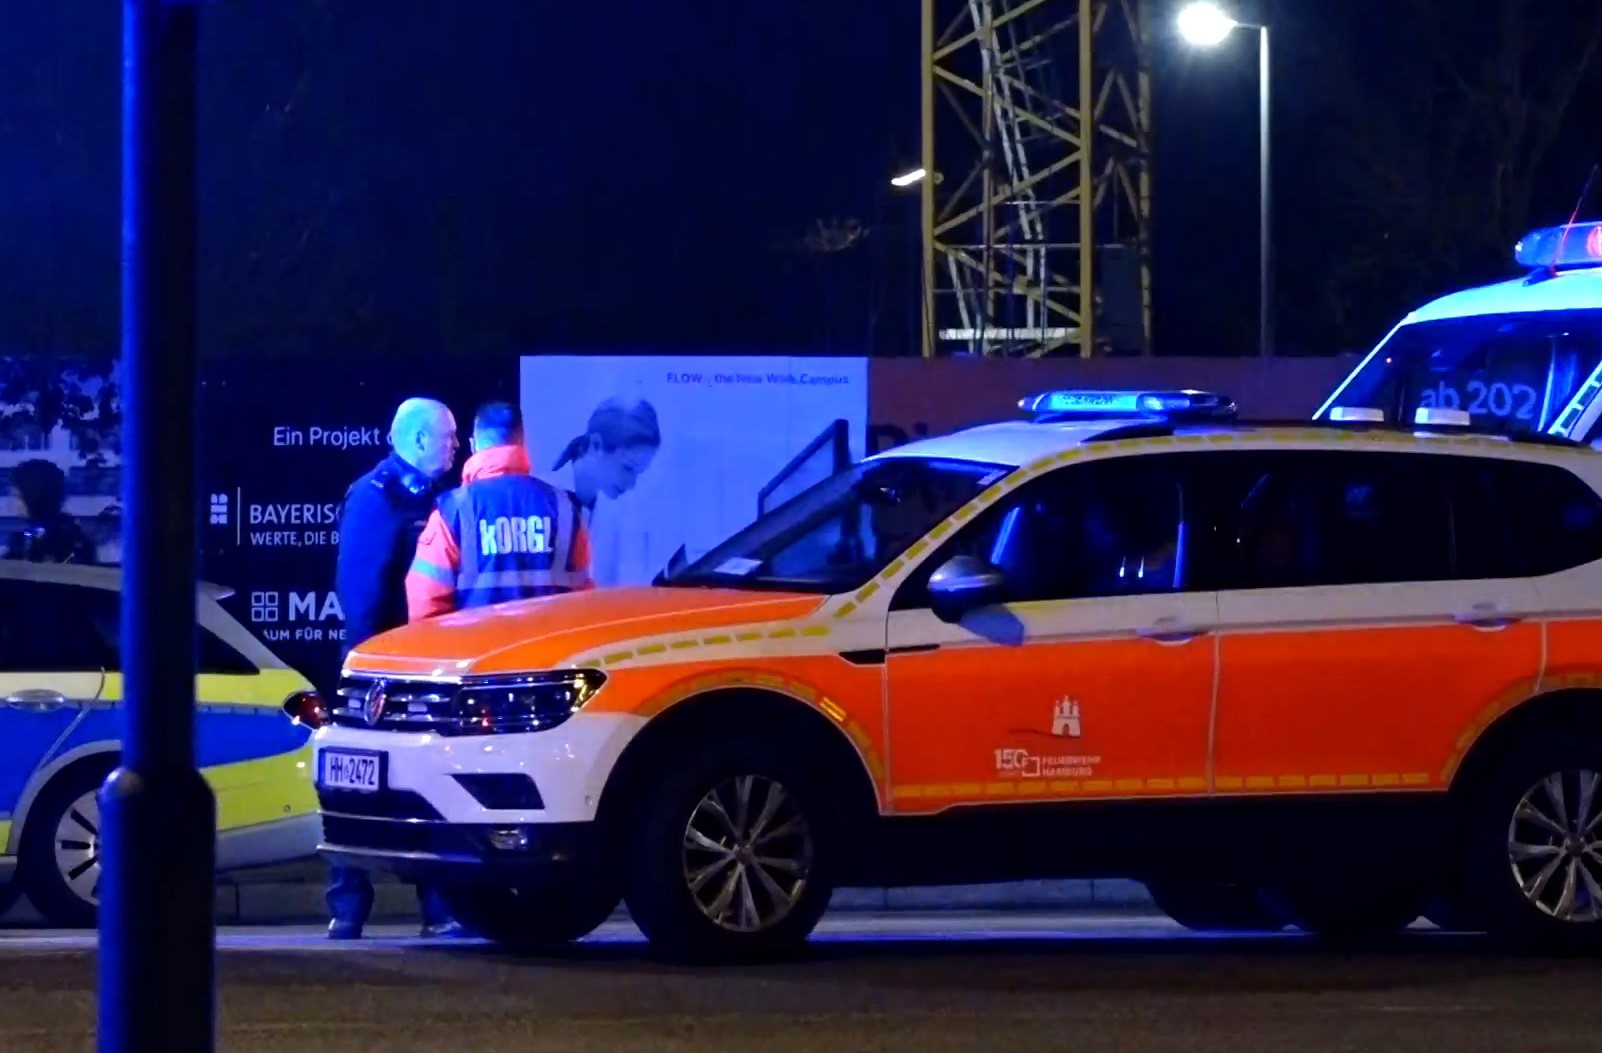 Поне 7 убити и 24 ранени след стрелба в Хамбург